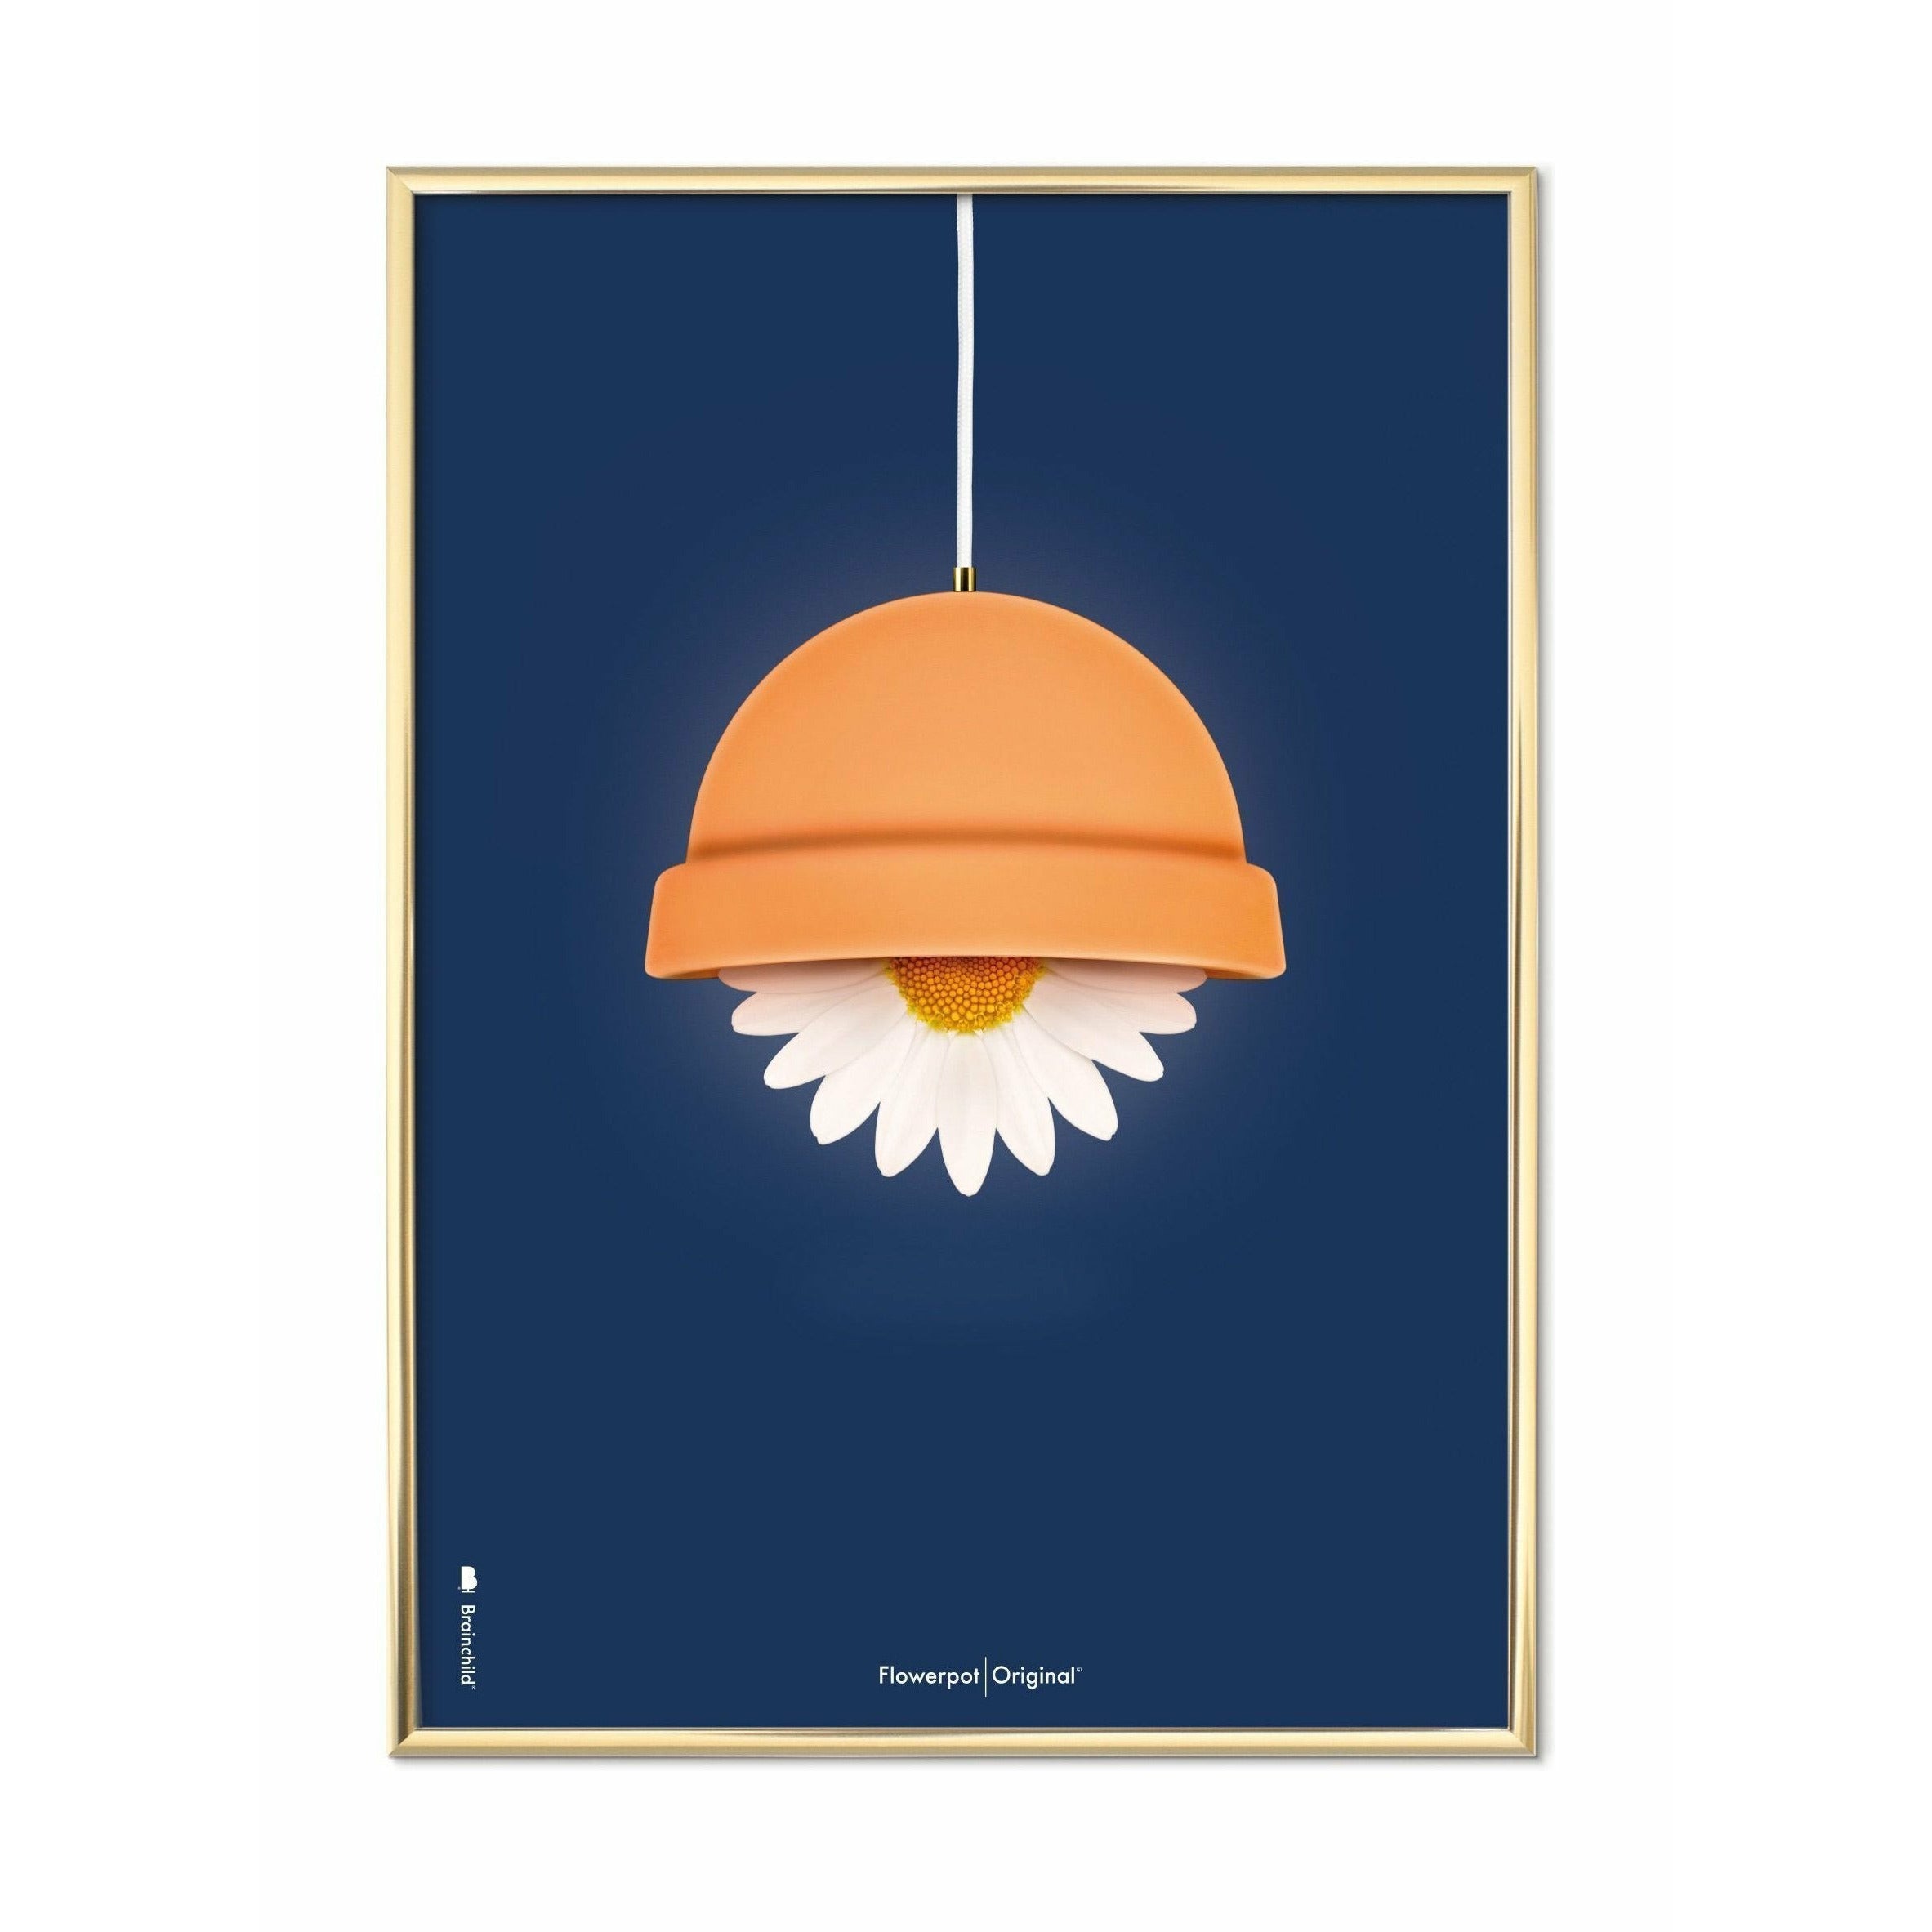 brainchild Flowerpot Classic Poster, messing gekleurd frame A5, donkerblauwe achtergrond